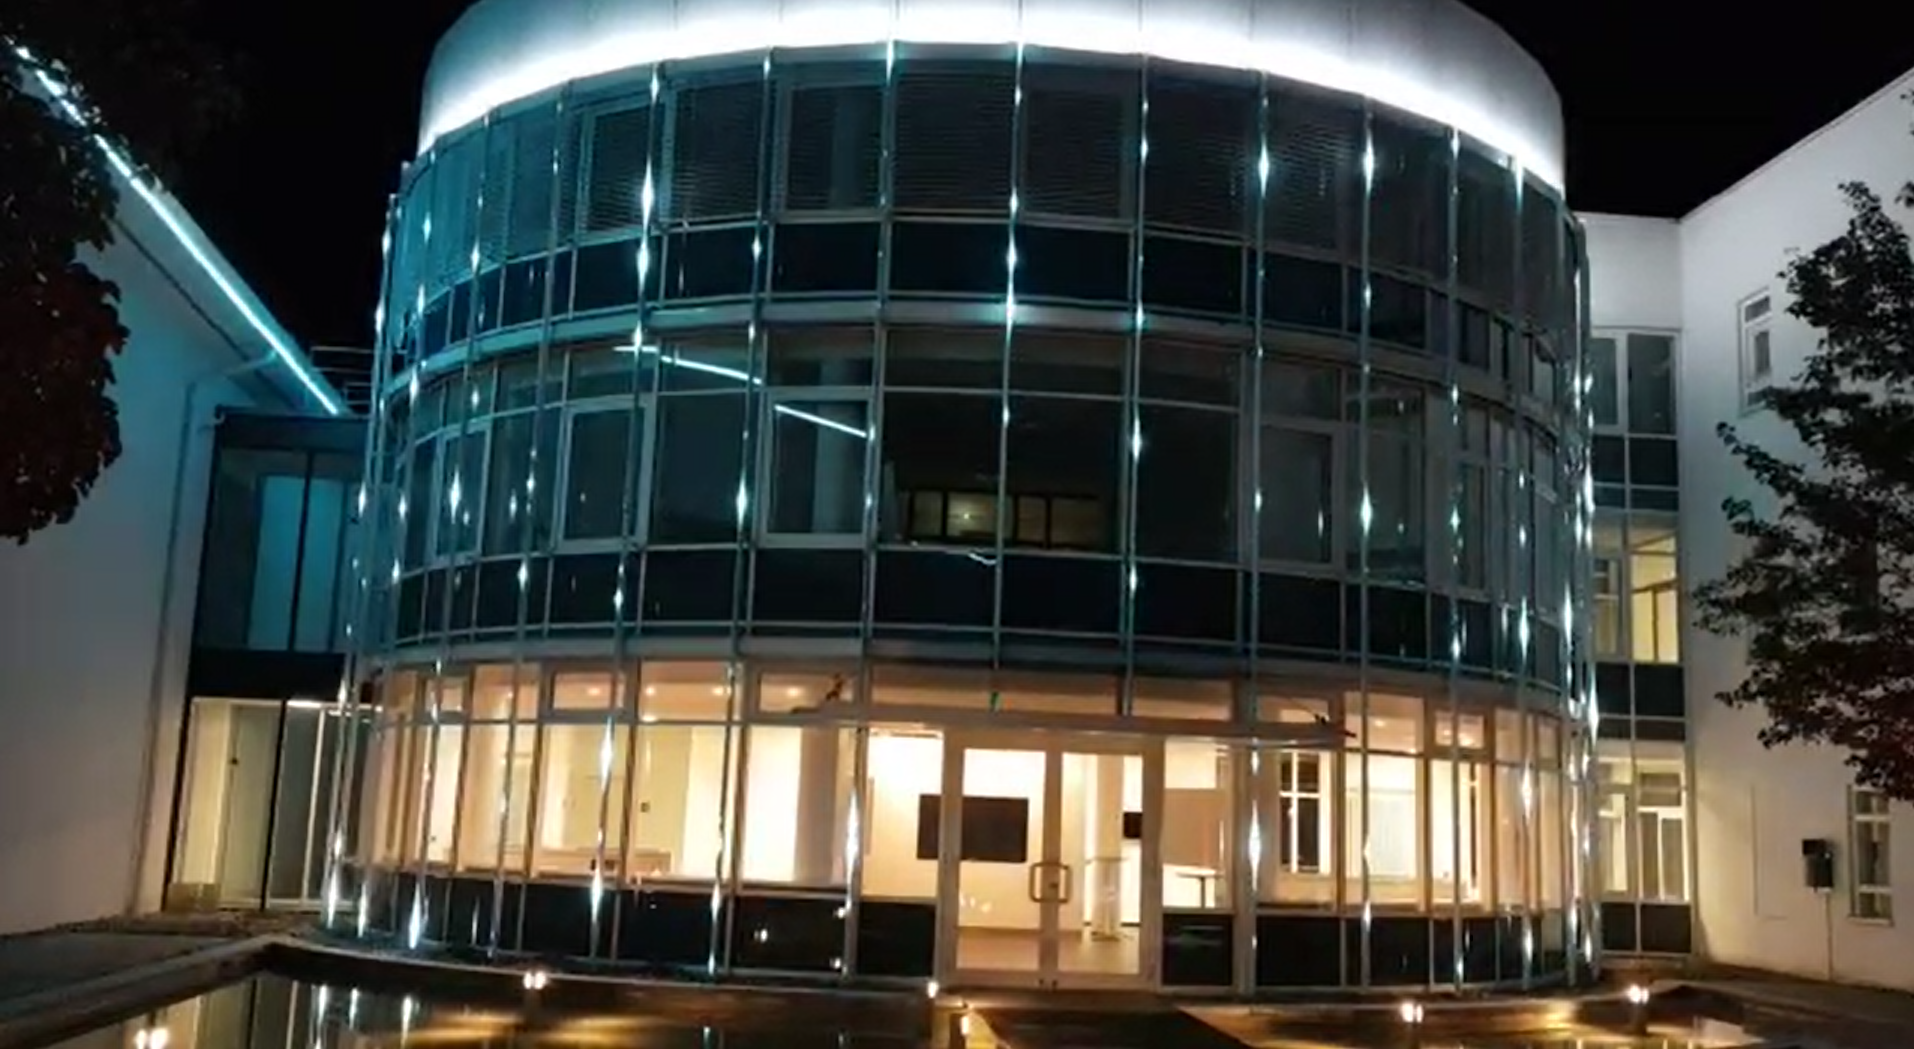 Siteco's TDC gets a new, modern façade lighting